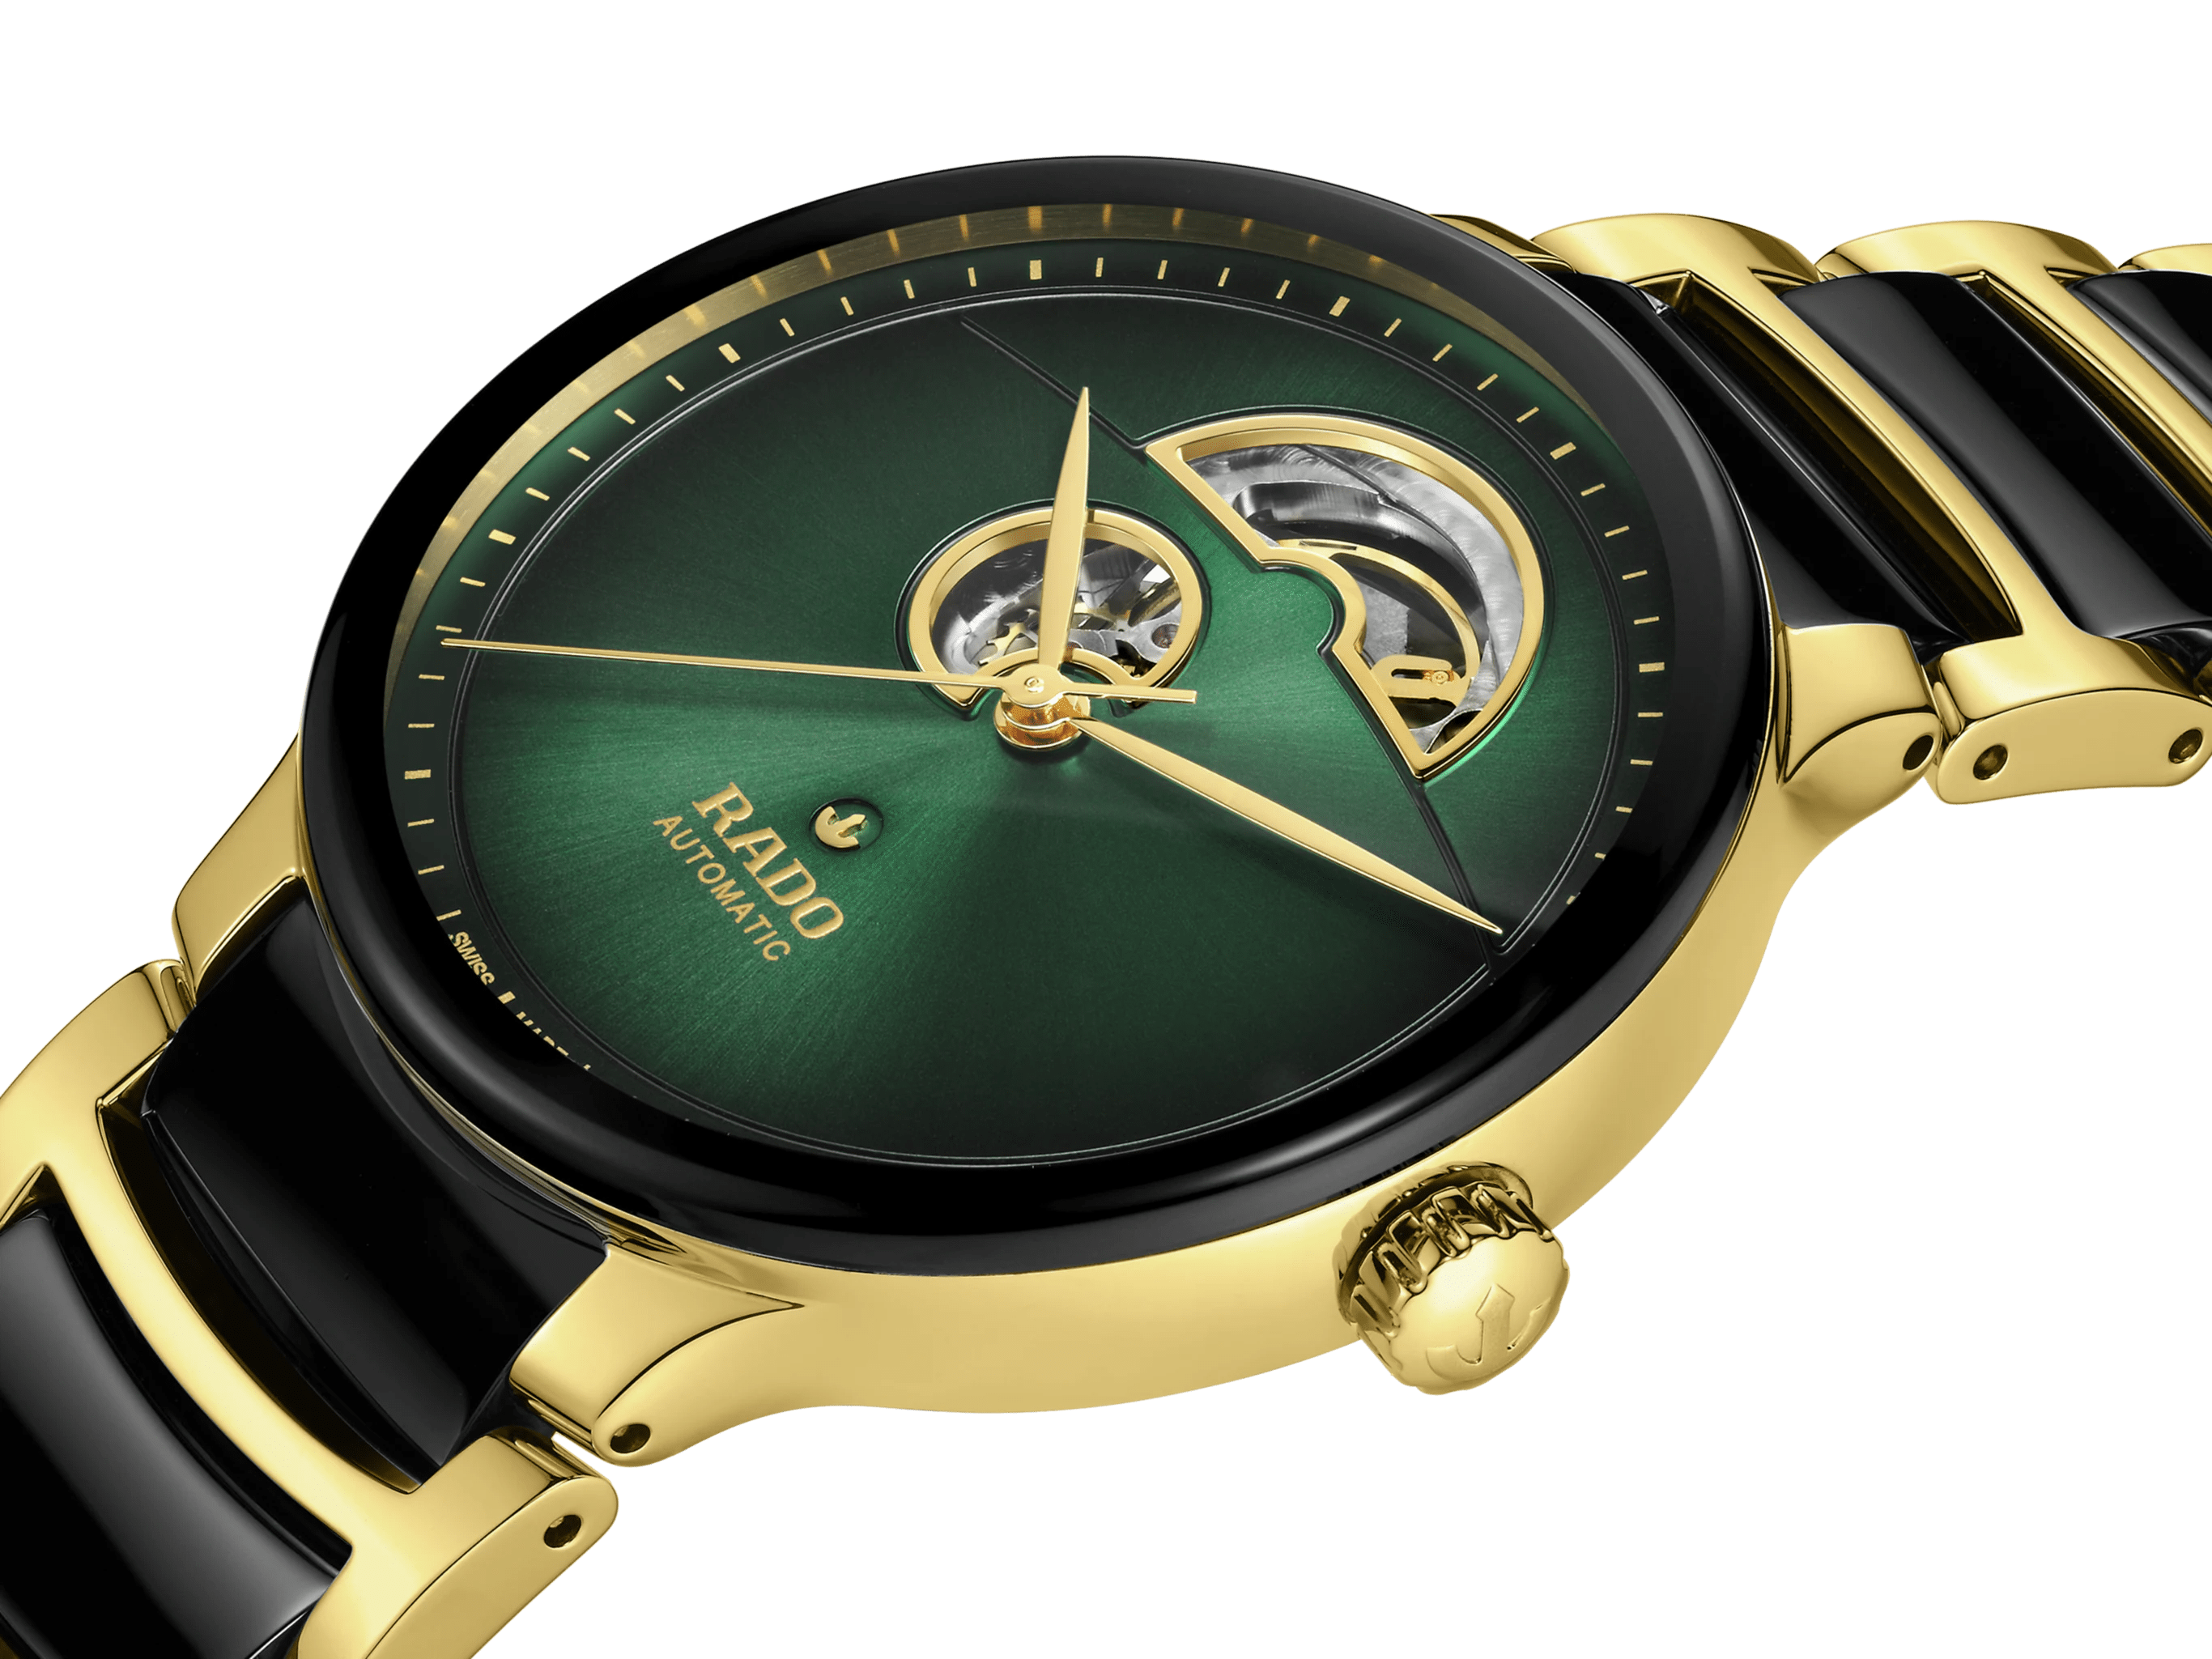 RADO Centrix Automatic Open Heart 39.5mm Green-Gold Men's Watch R30008302